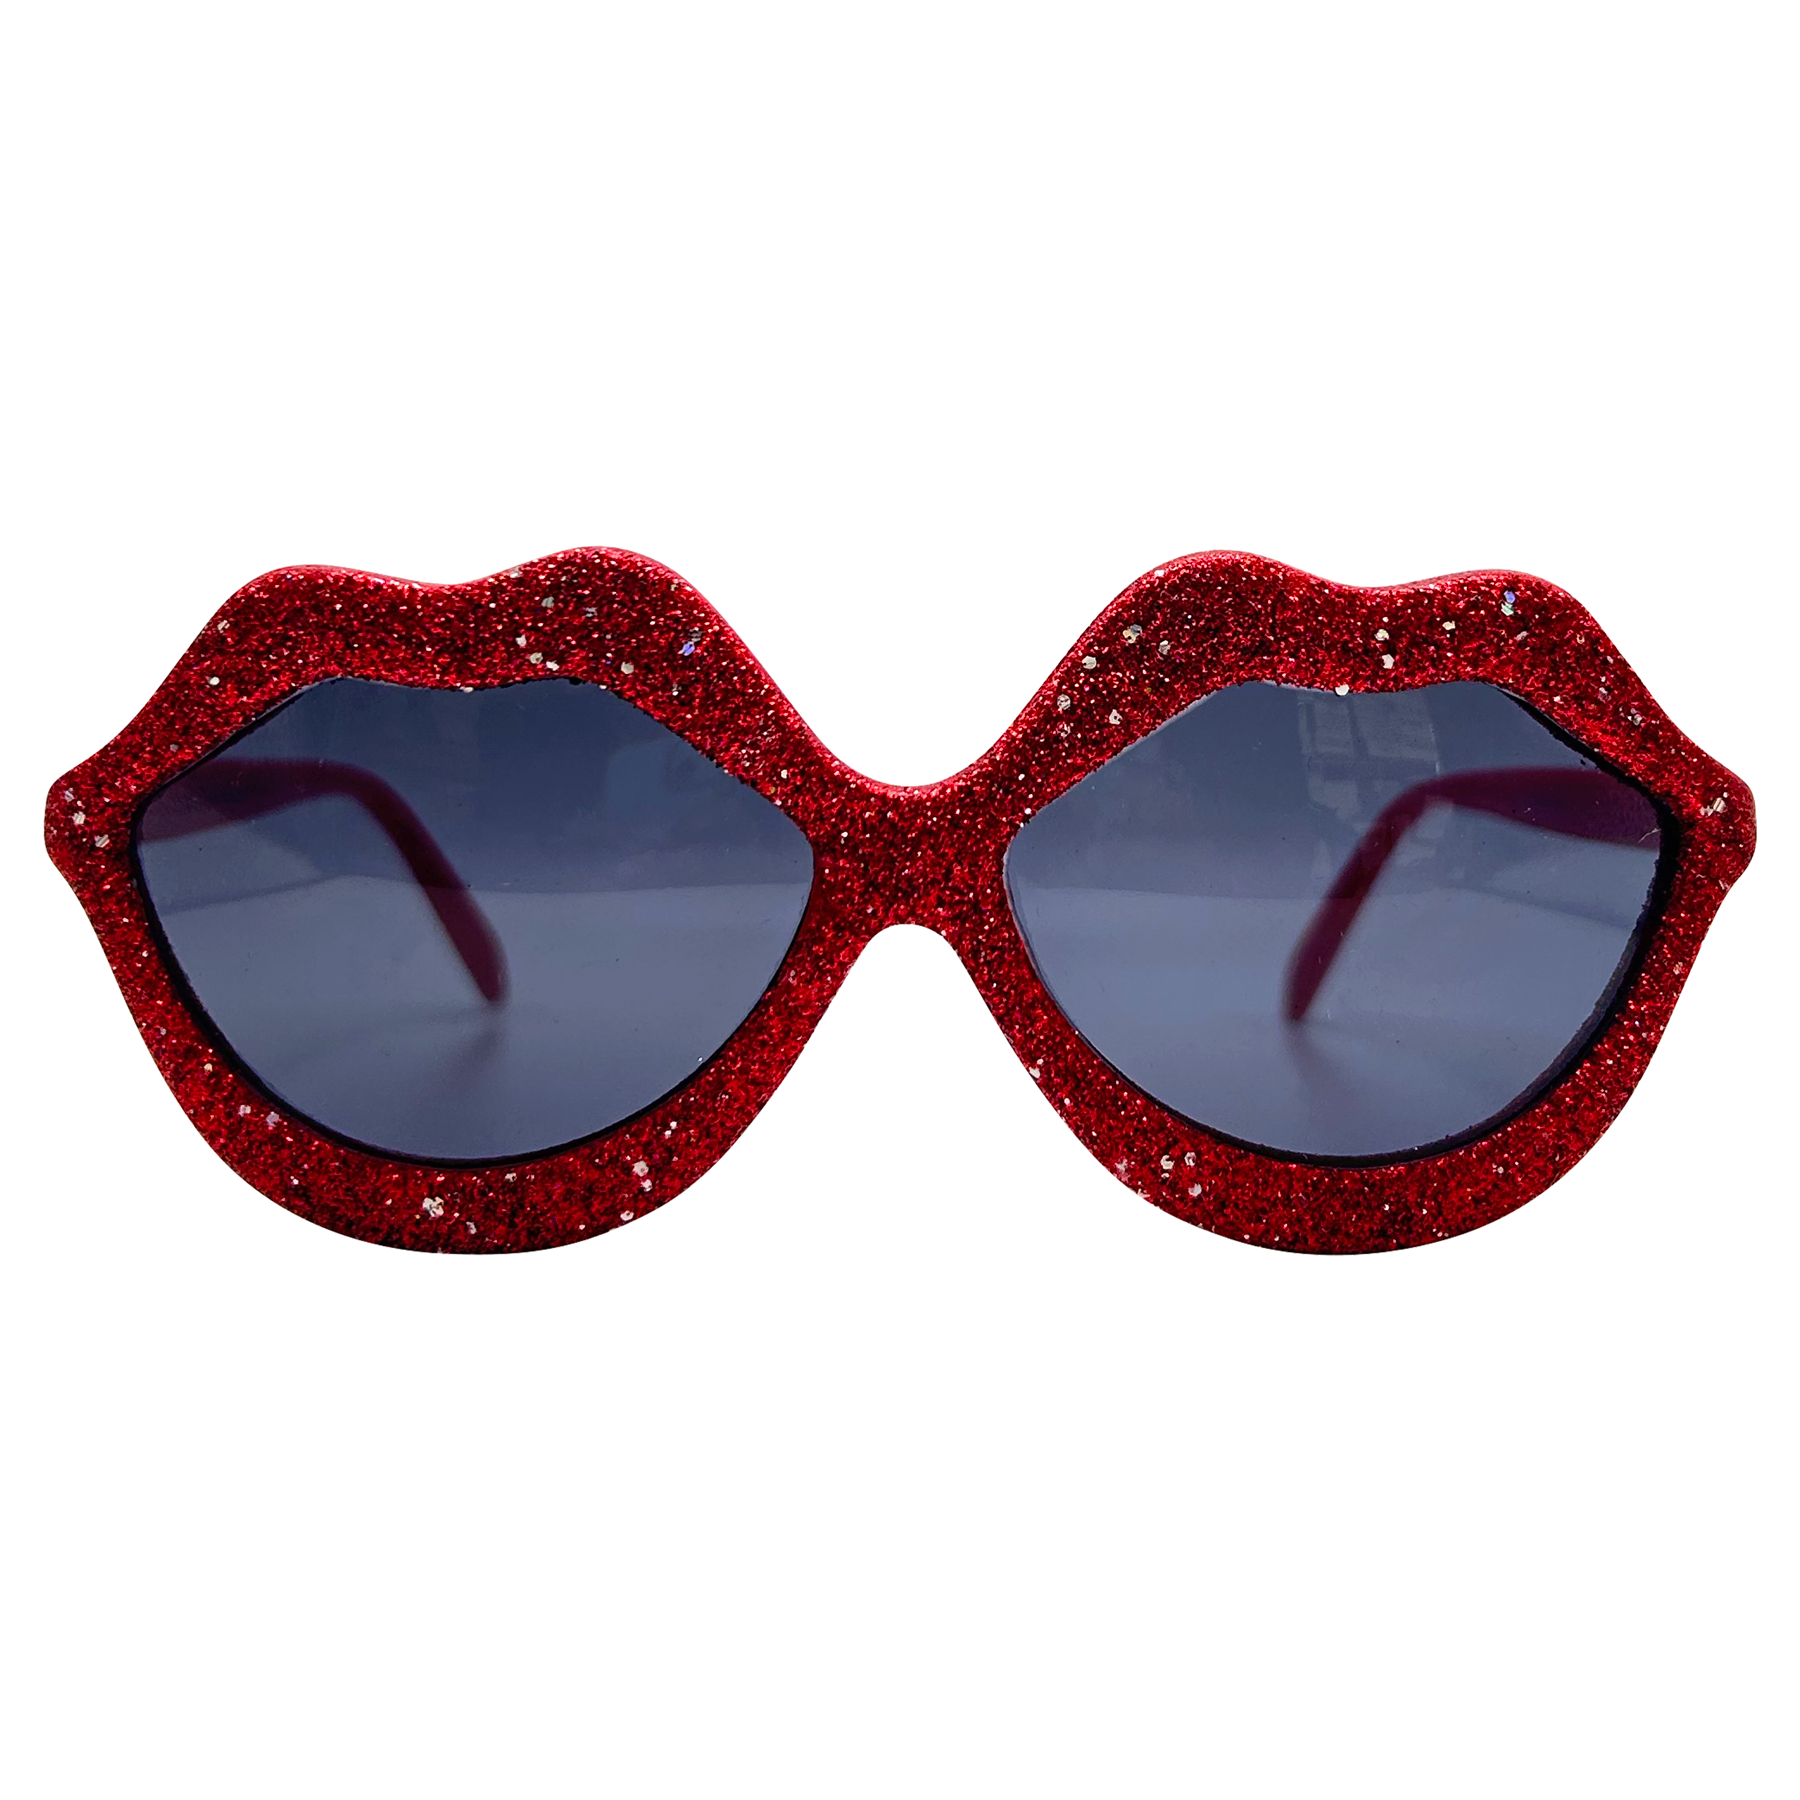 LOVE INTEREST Sparkly Lip-Shaped Sunglasses